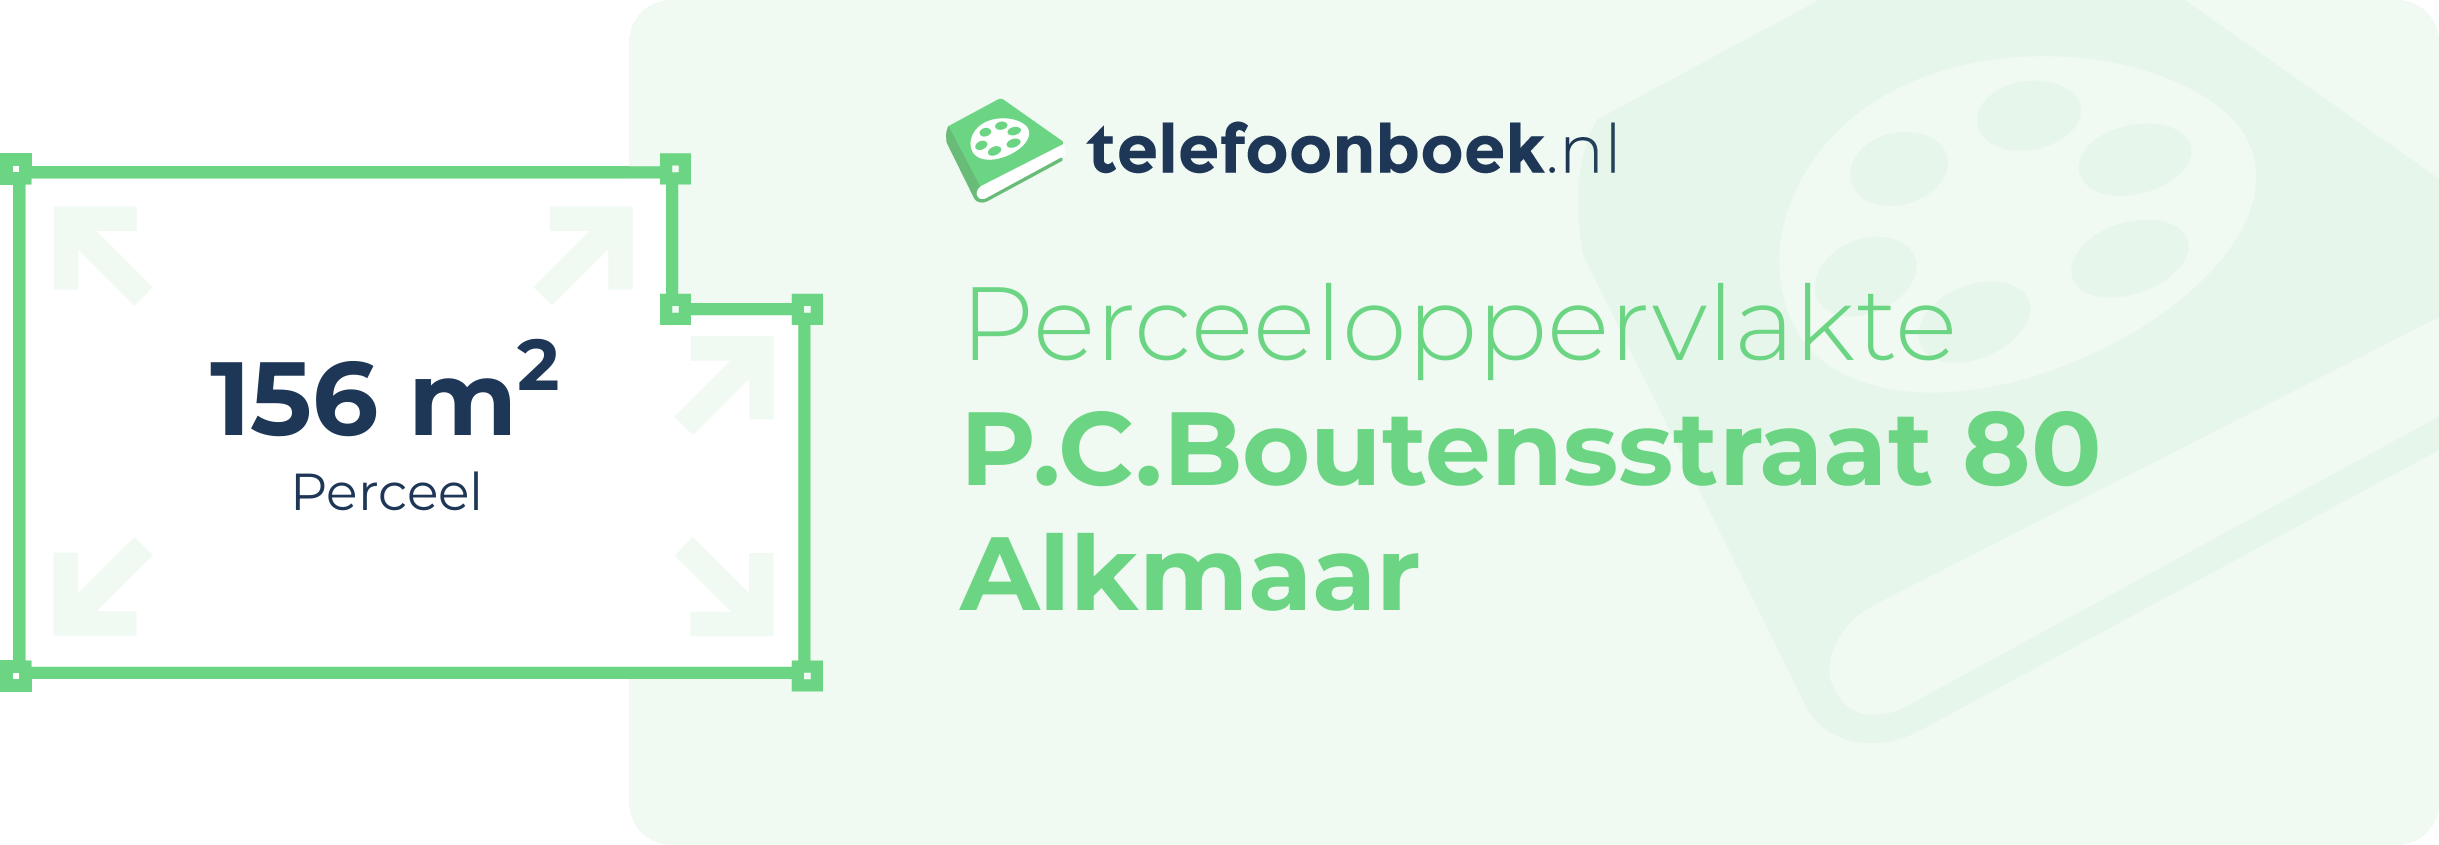 Perceeloppervlakte P.C.Boutensstraat 80 Alkmaar